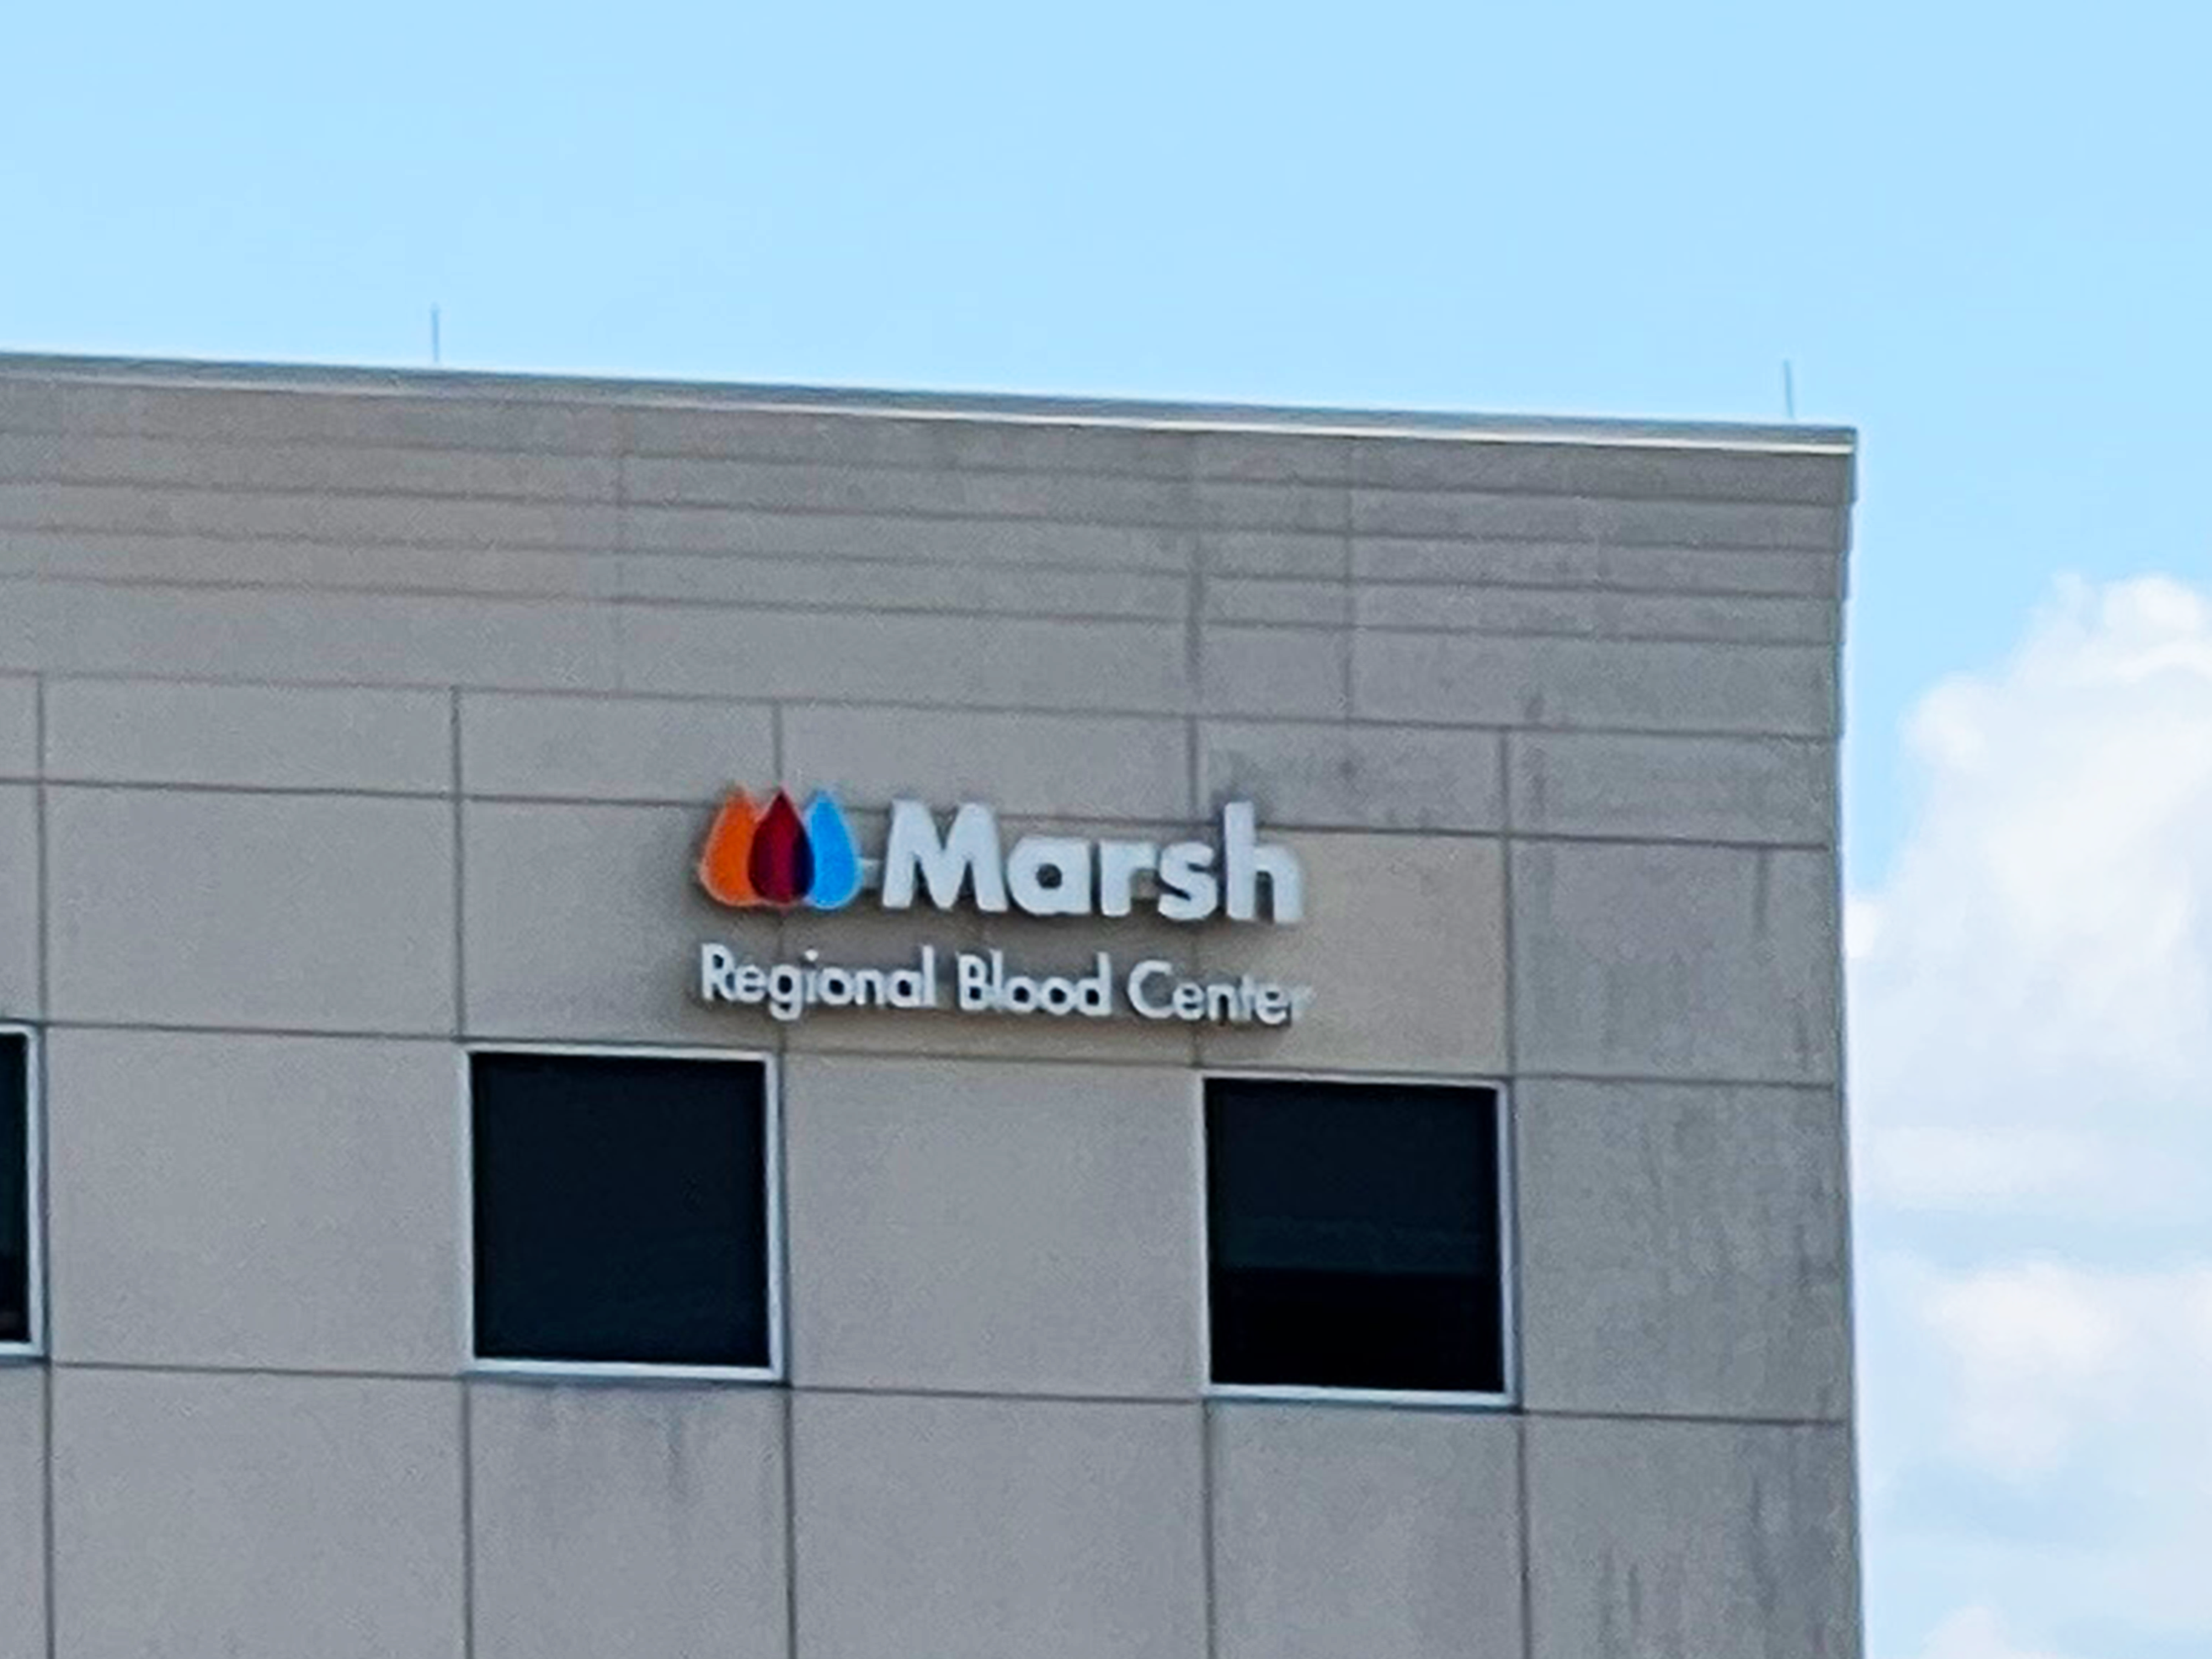 Marsh Regional Blood Center building in Kingsport